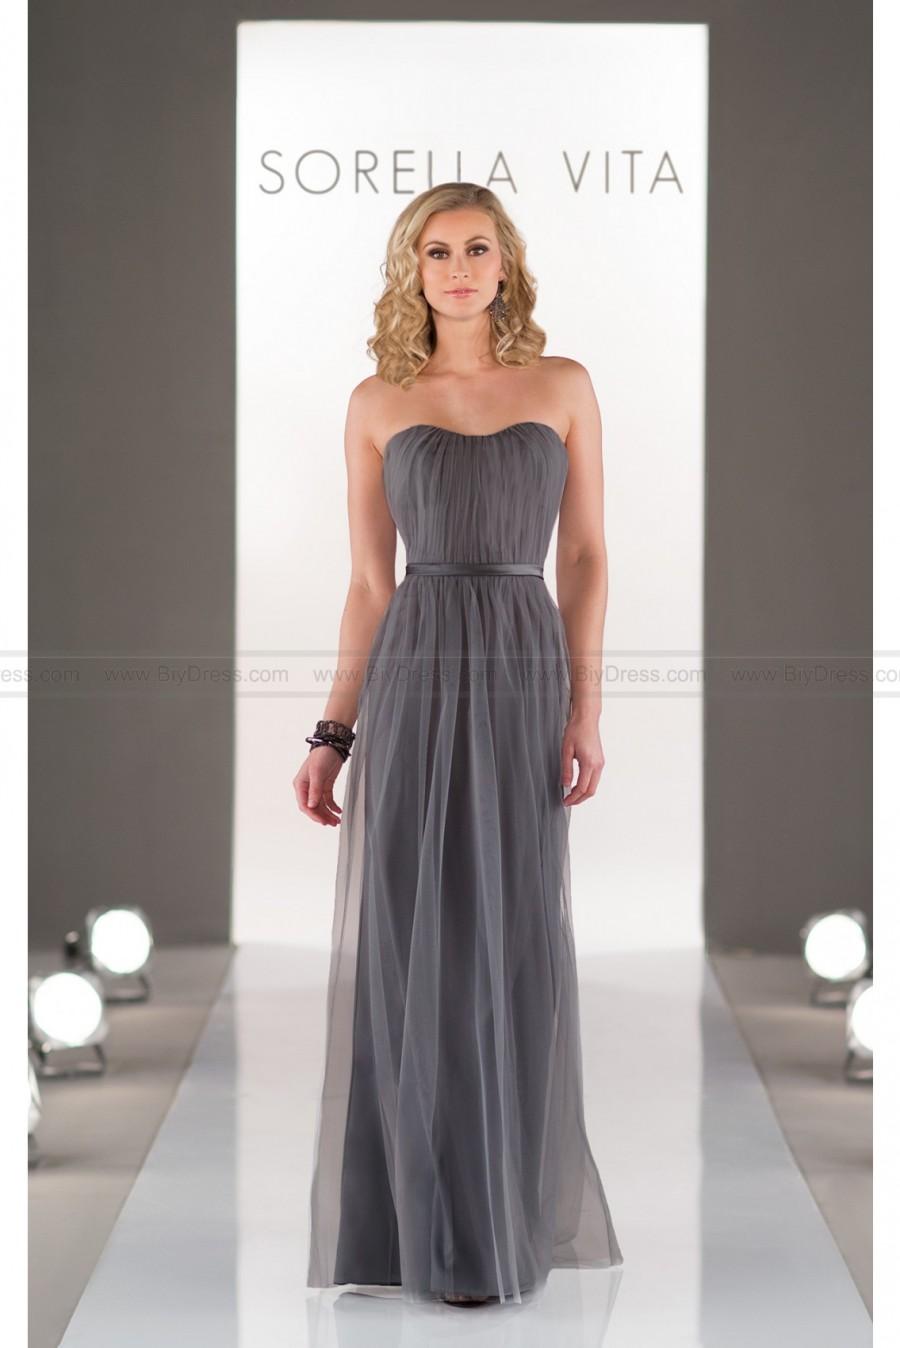 Mariage - Sorella Vita Strapless Floor Length Gown Style 8468